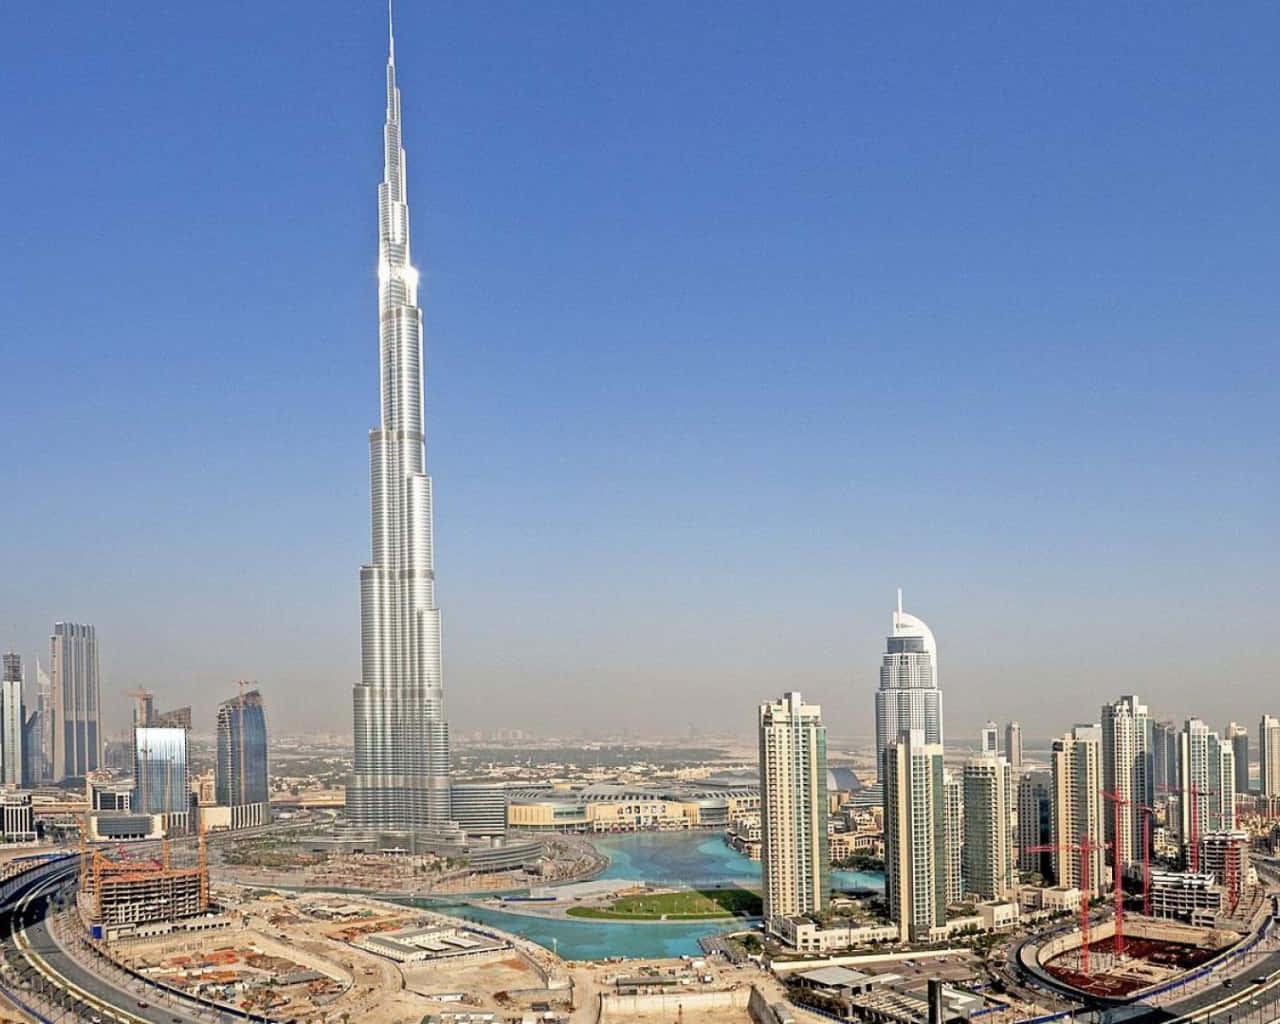 Majestic Burj Khalifa dominating the Dubai skyline